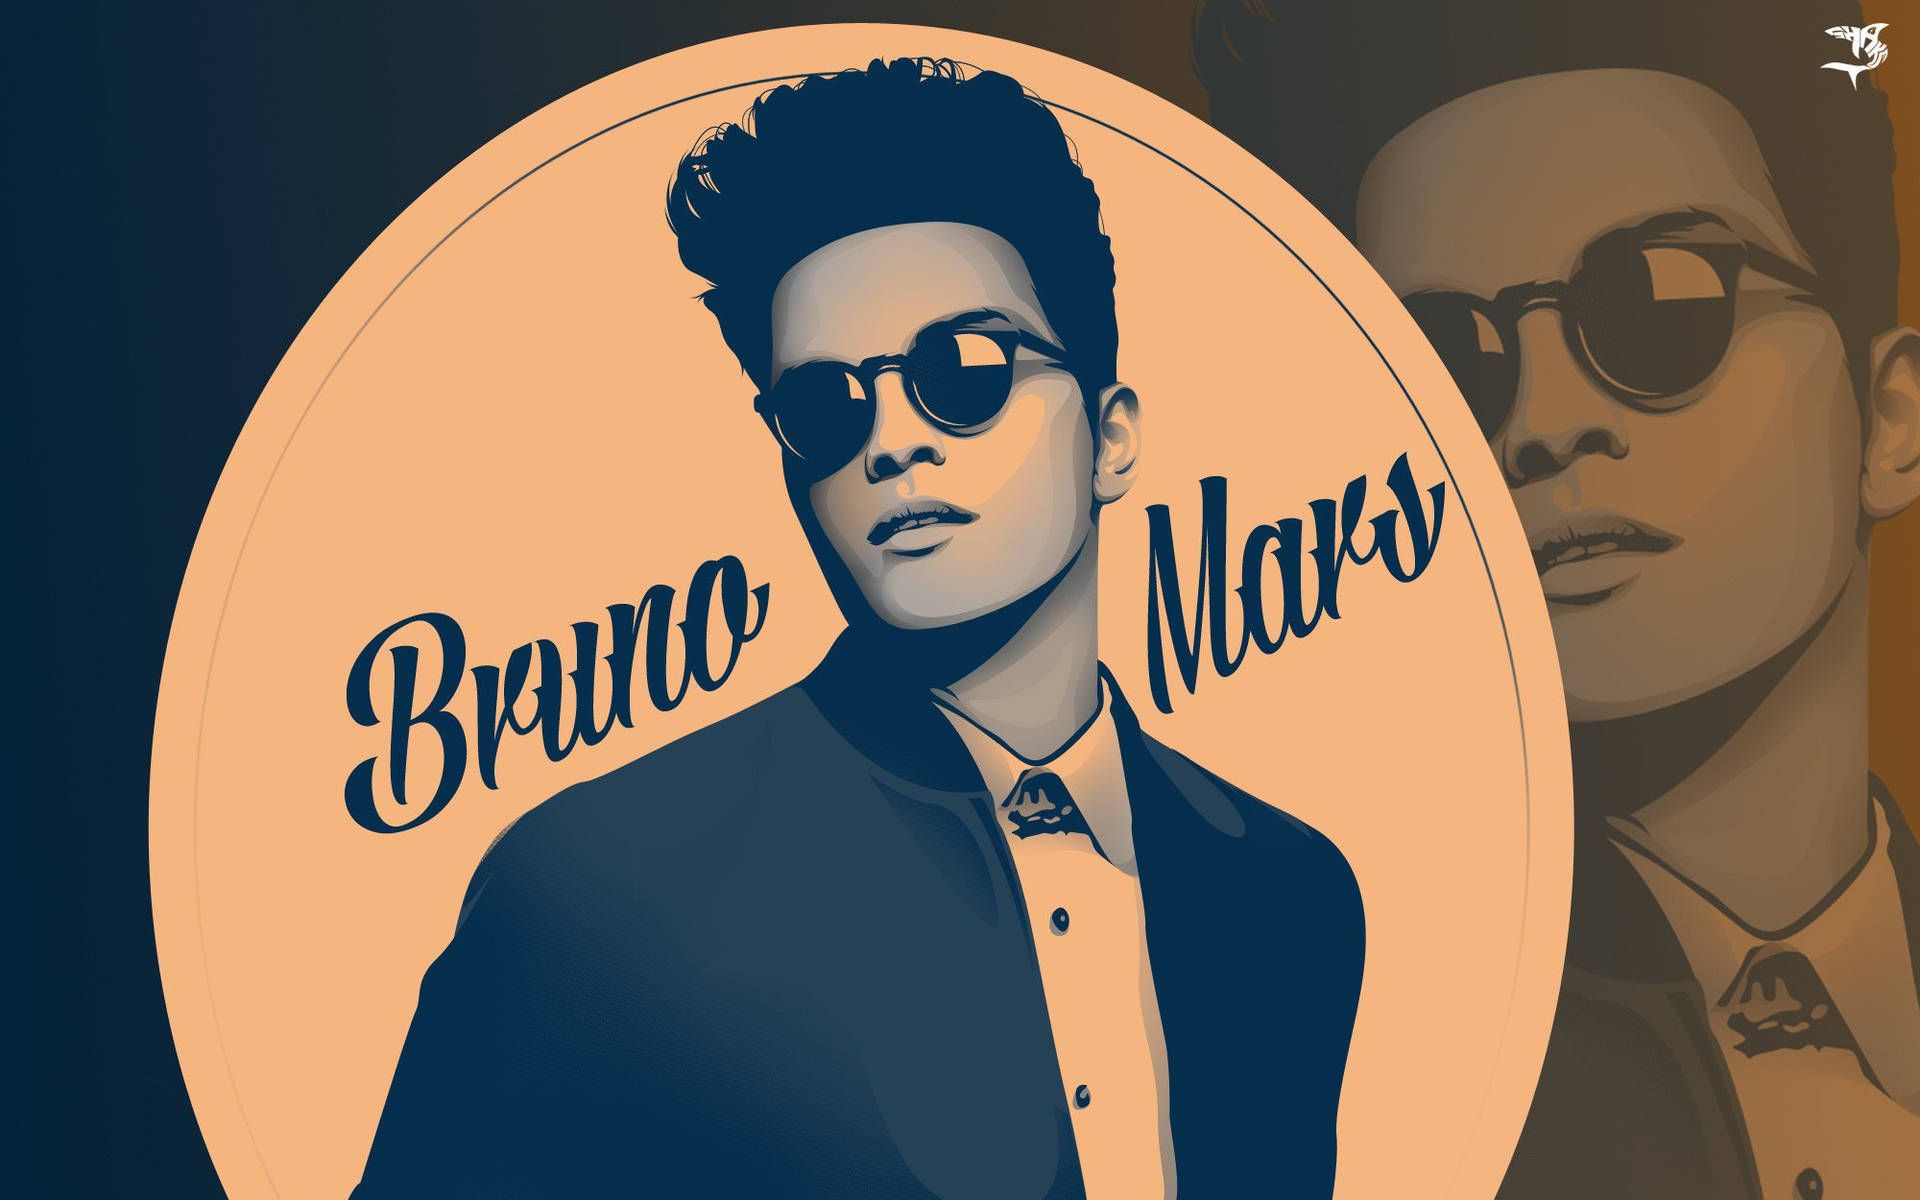 Free Bruno Mars Wallpaper Downloads, Bruno Mars Wallpaper for FREE